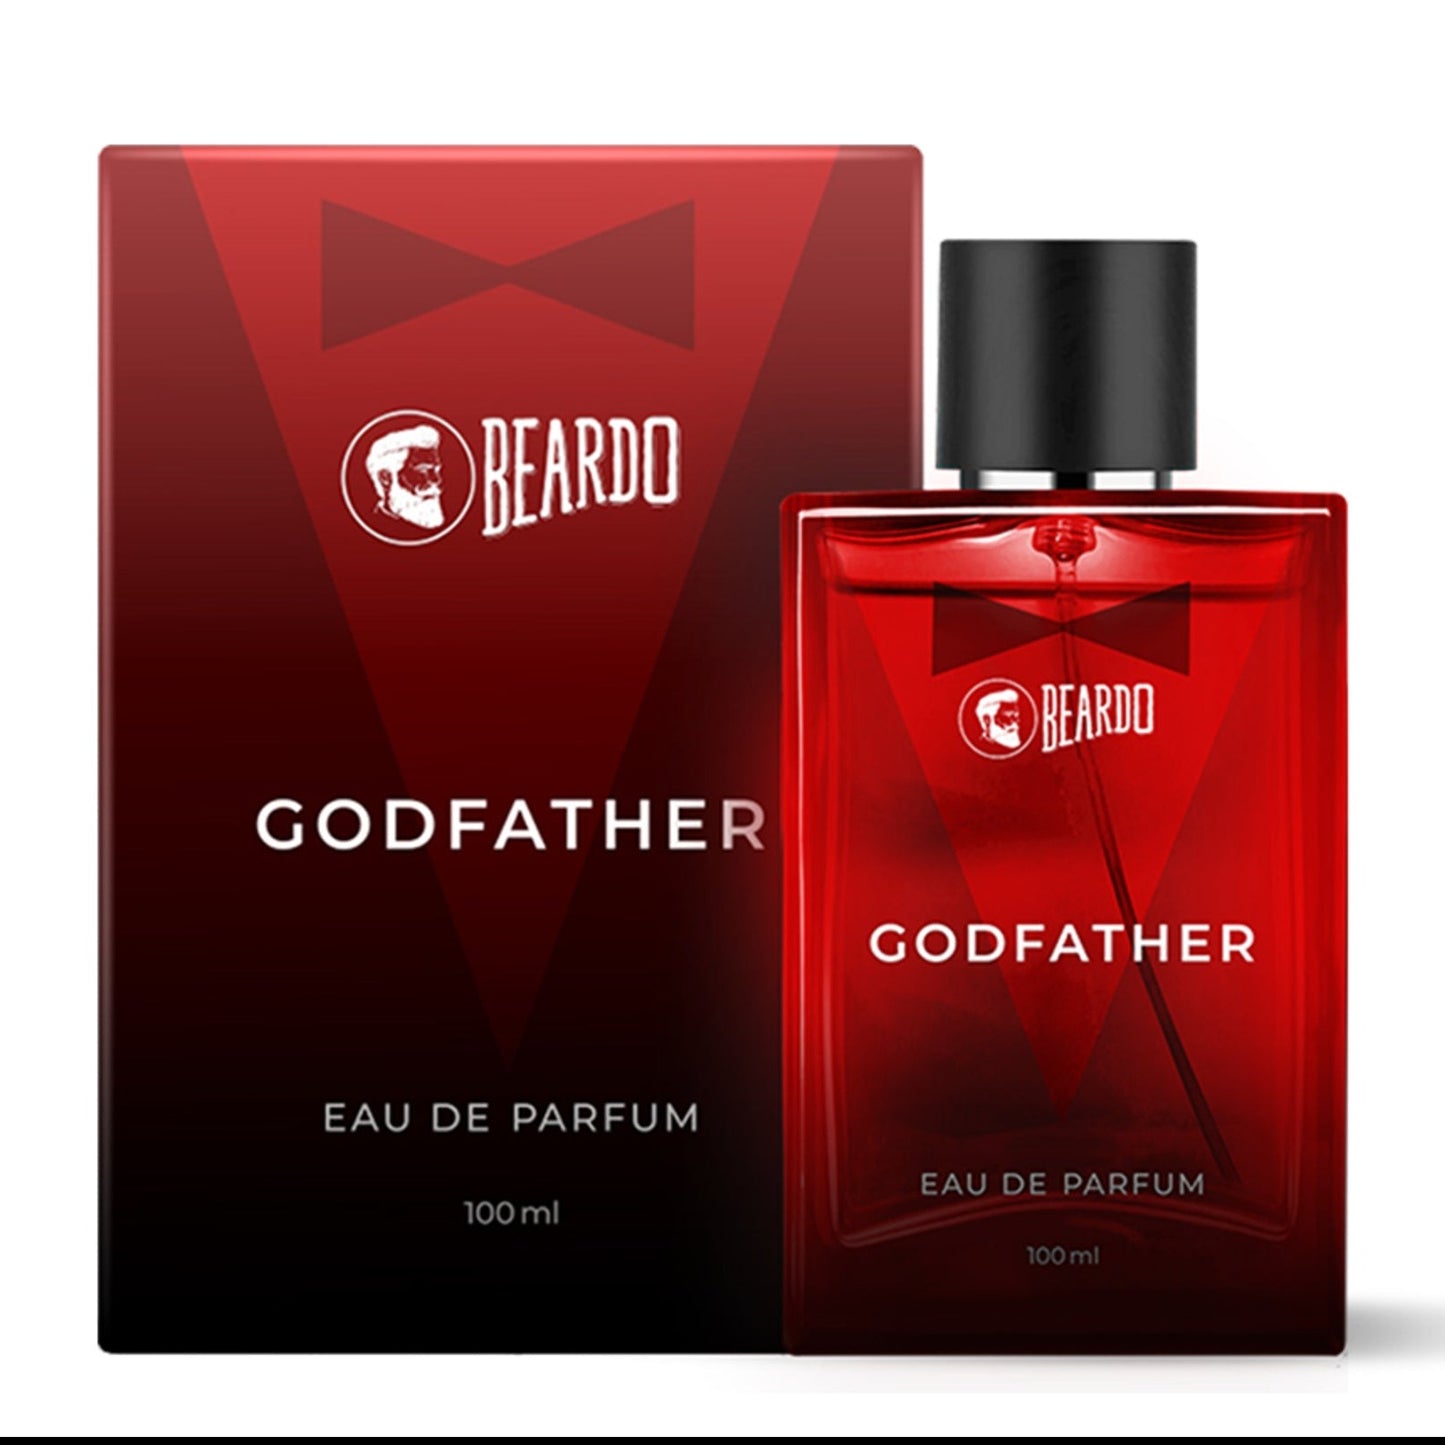 godfather perfume, eau de parfum, beardo godfather